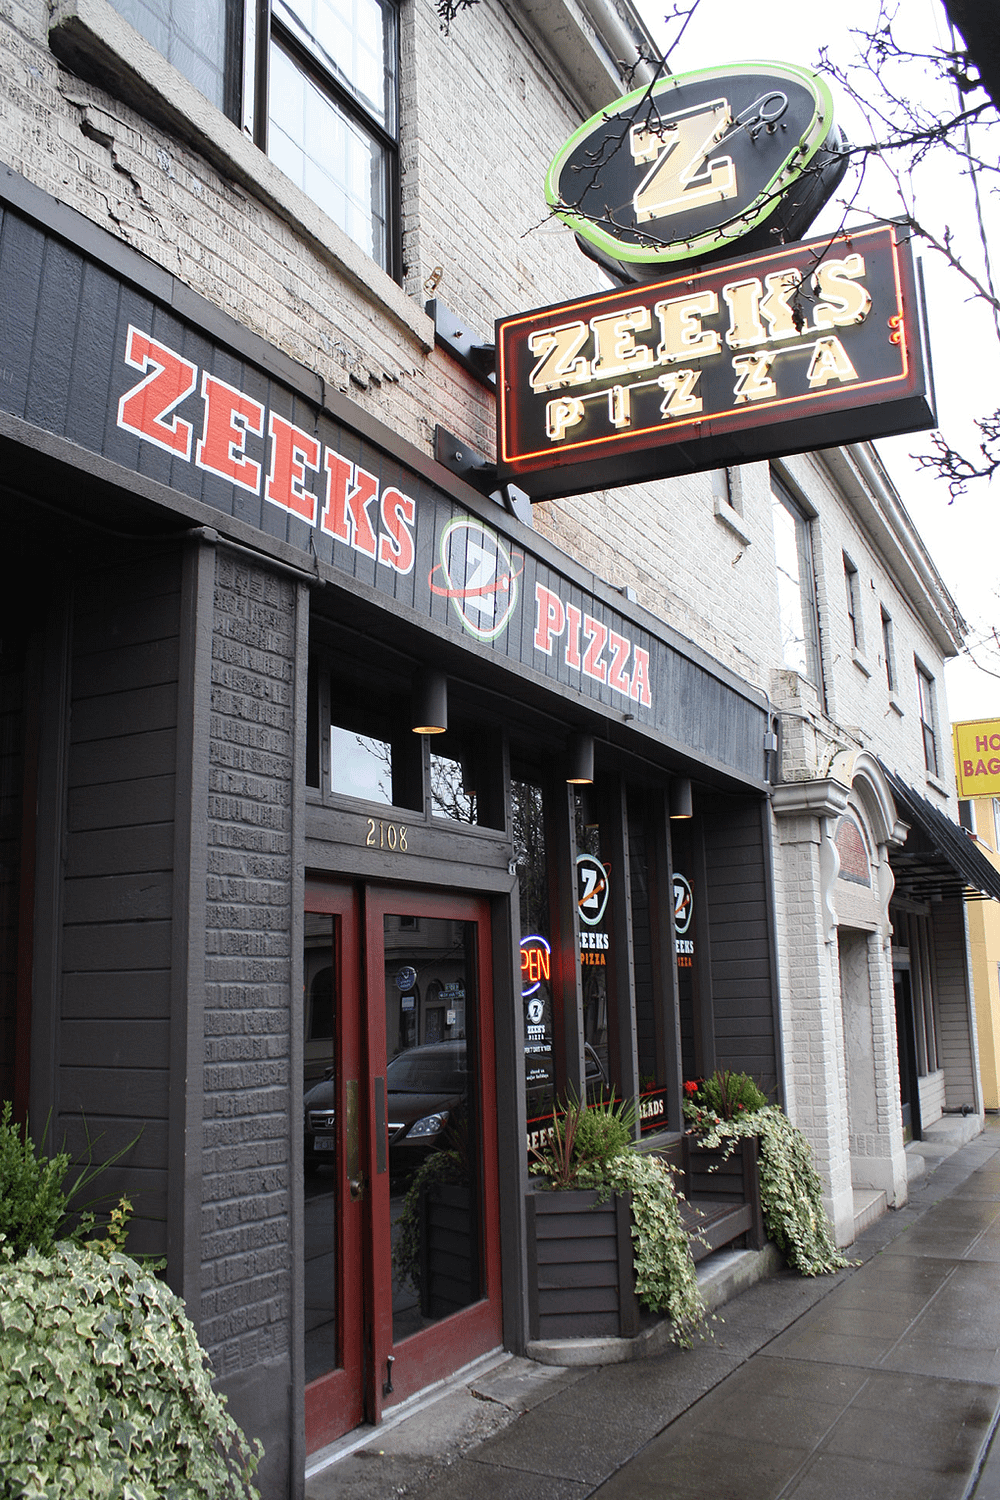 the exterior of a Zeeks pizza restaurant